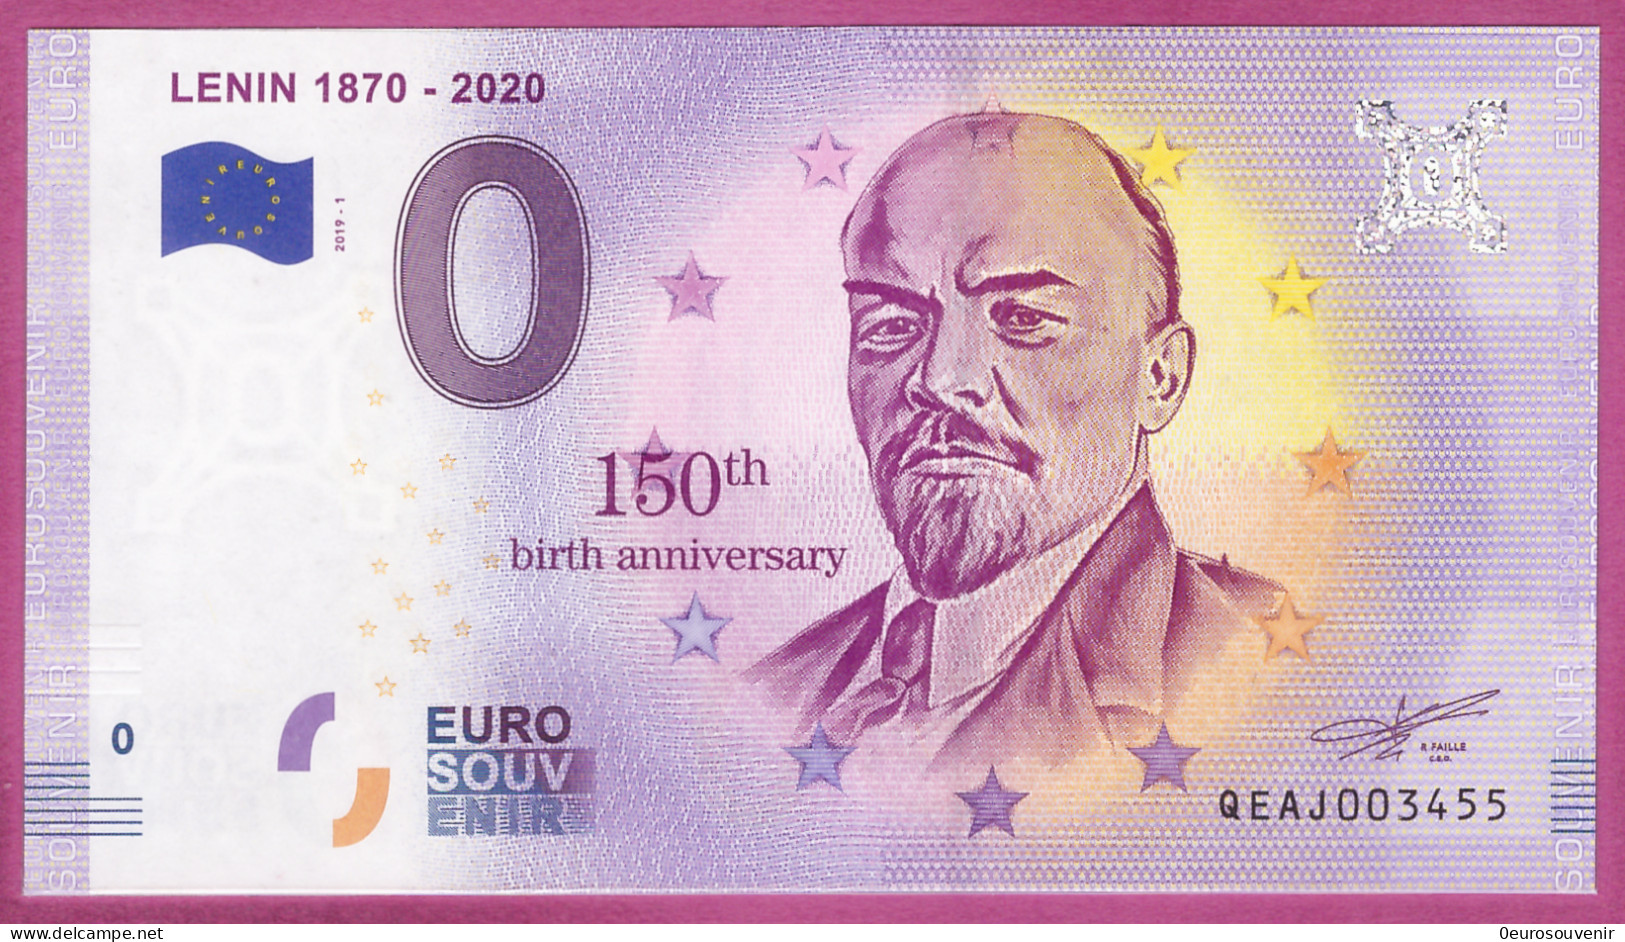 0-Euro QEAJ 2019-1 LENIN 1870 - 2020 - 150th BITH-ANNIVERSARY - Private Proofs / Unofficial